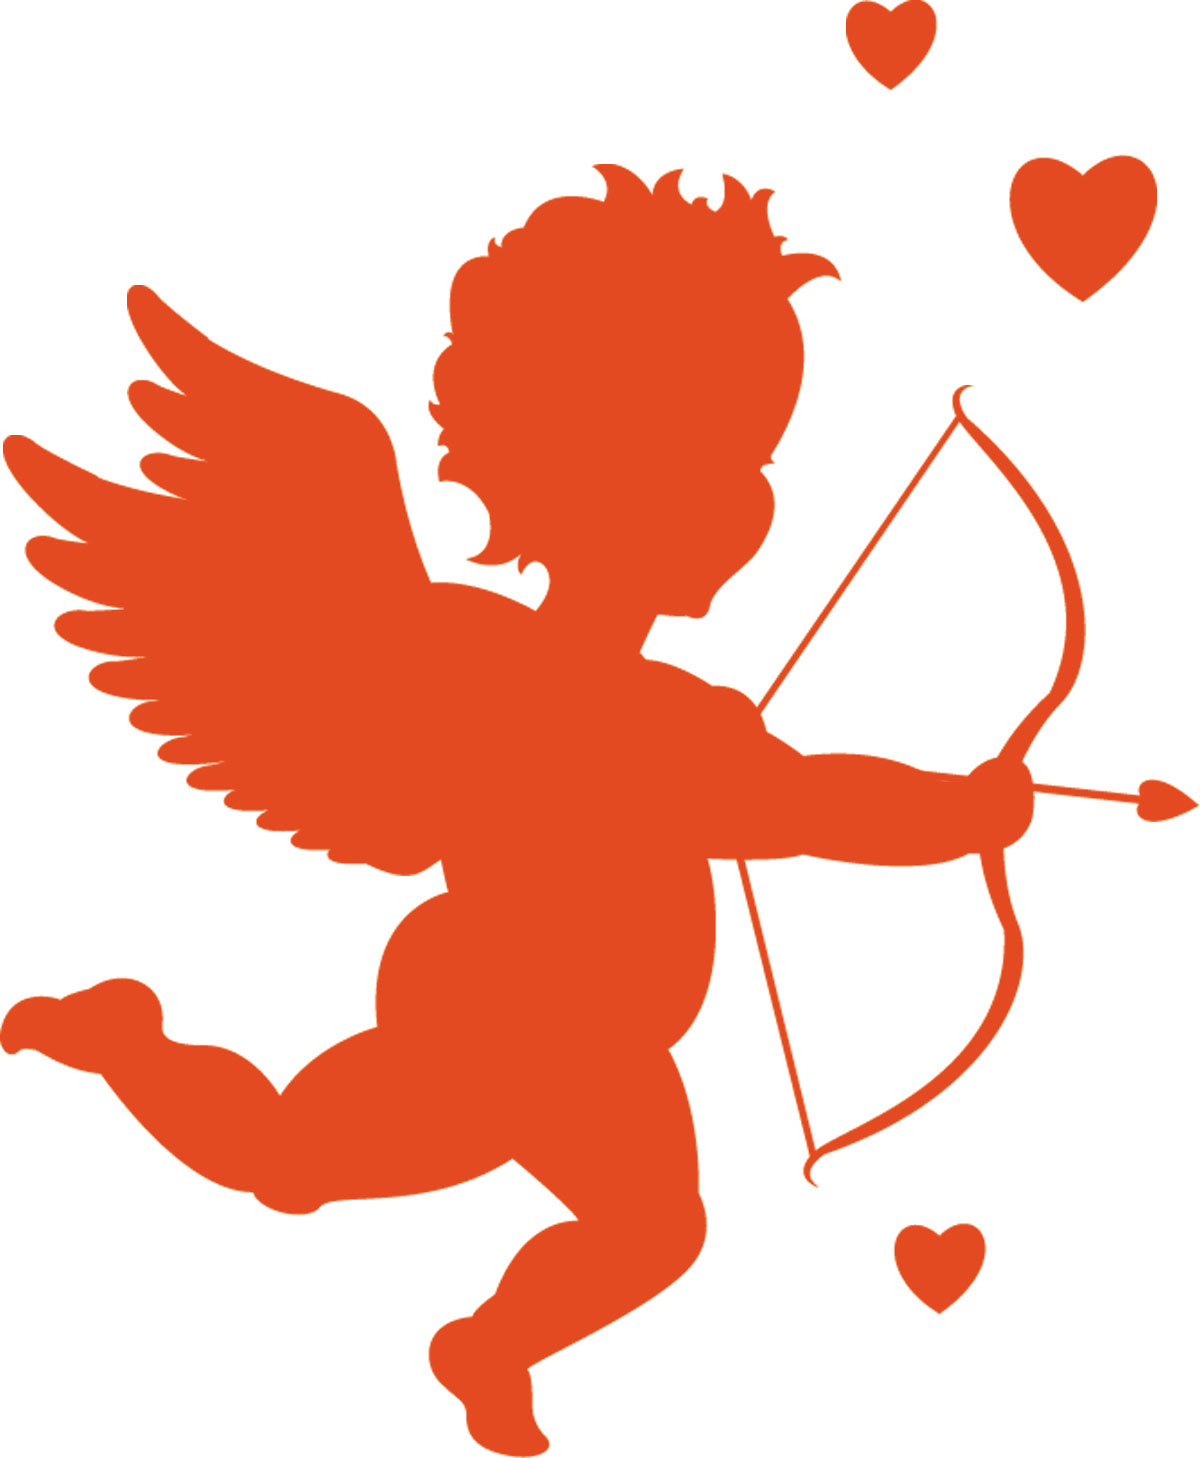 Cupid Images - Clipart librar